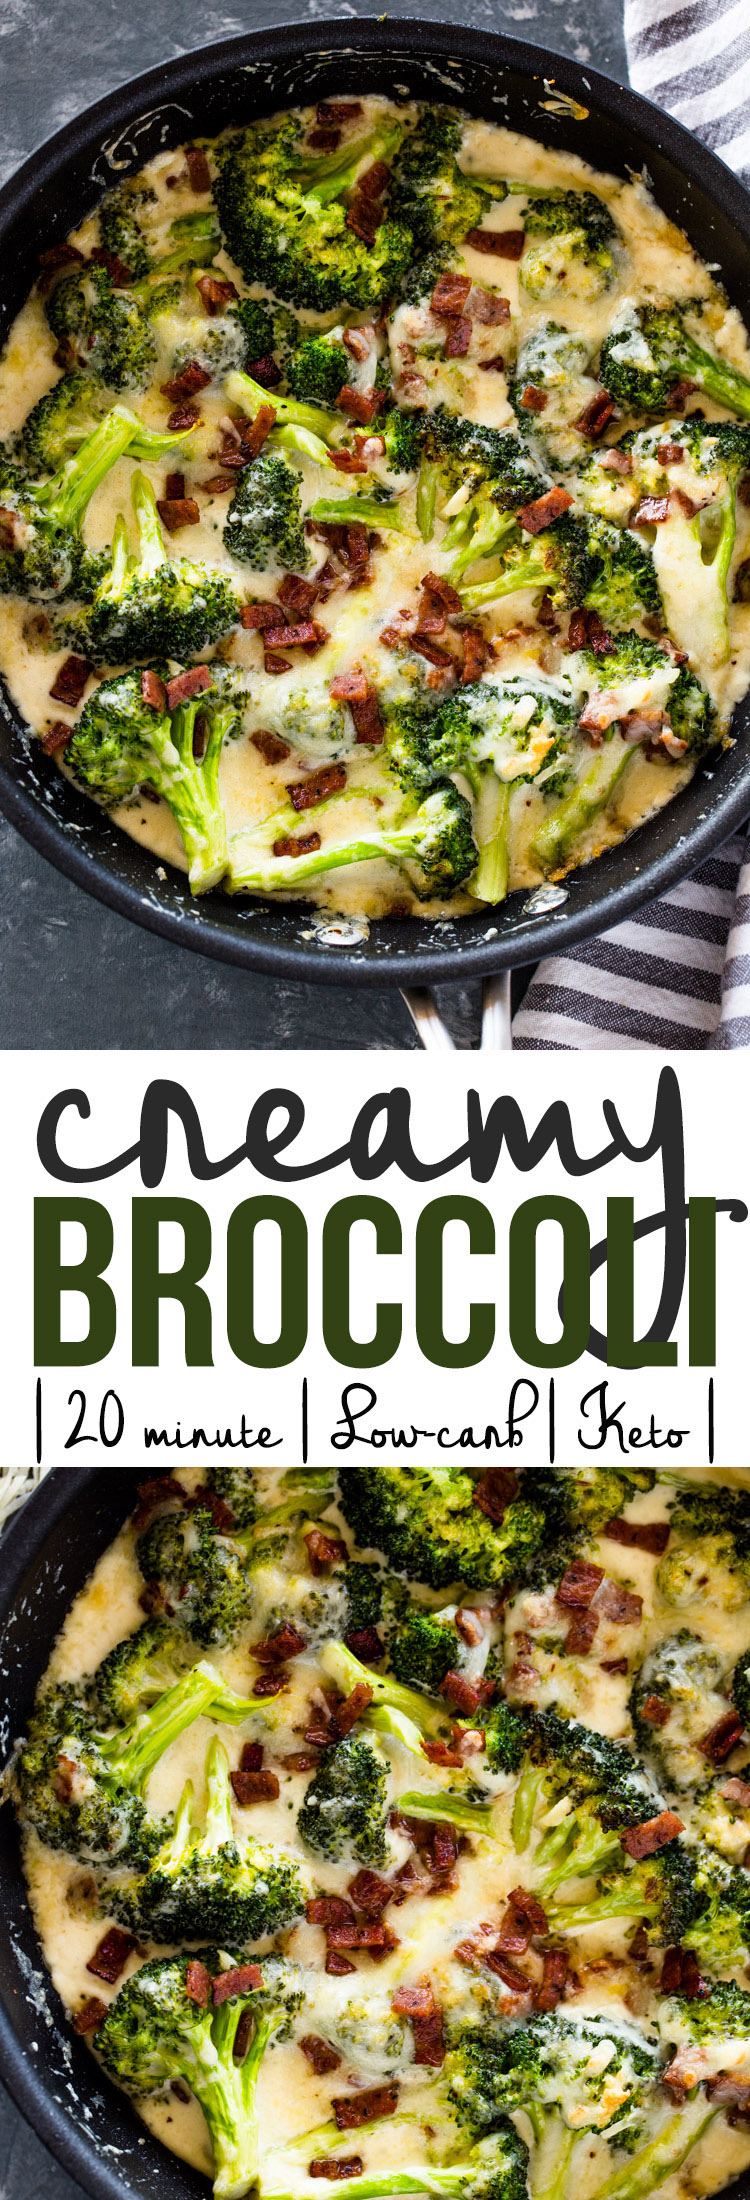 Keto Creamy Broccoli